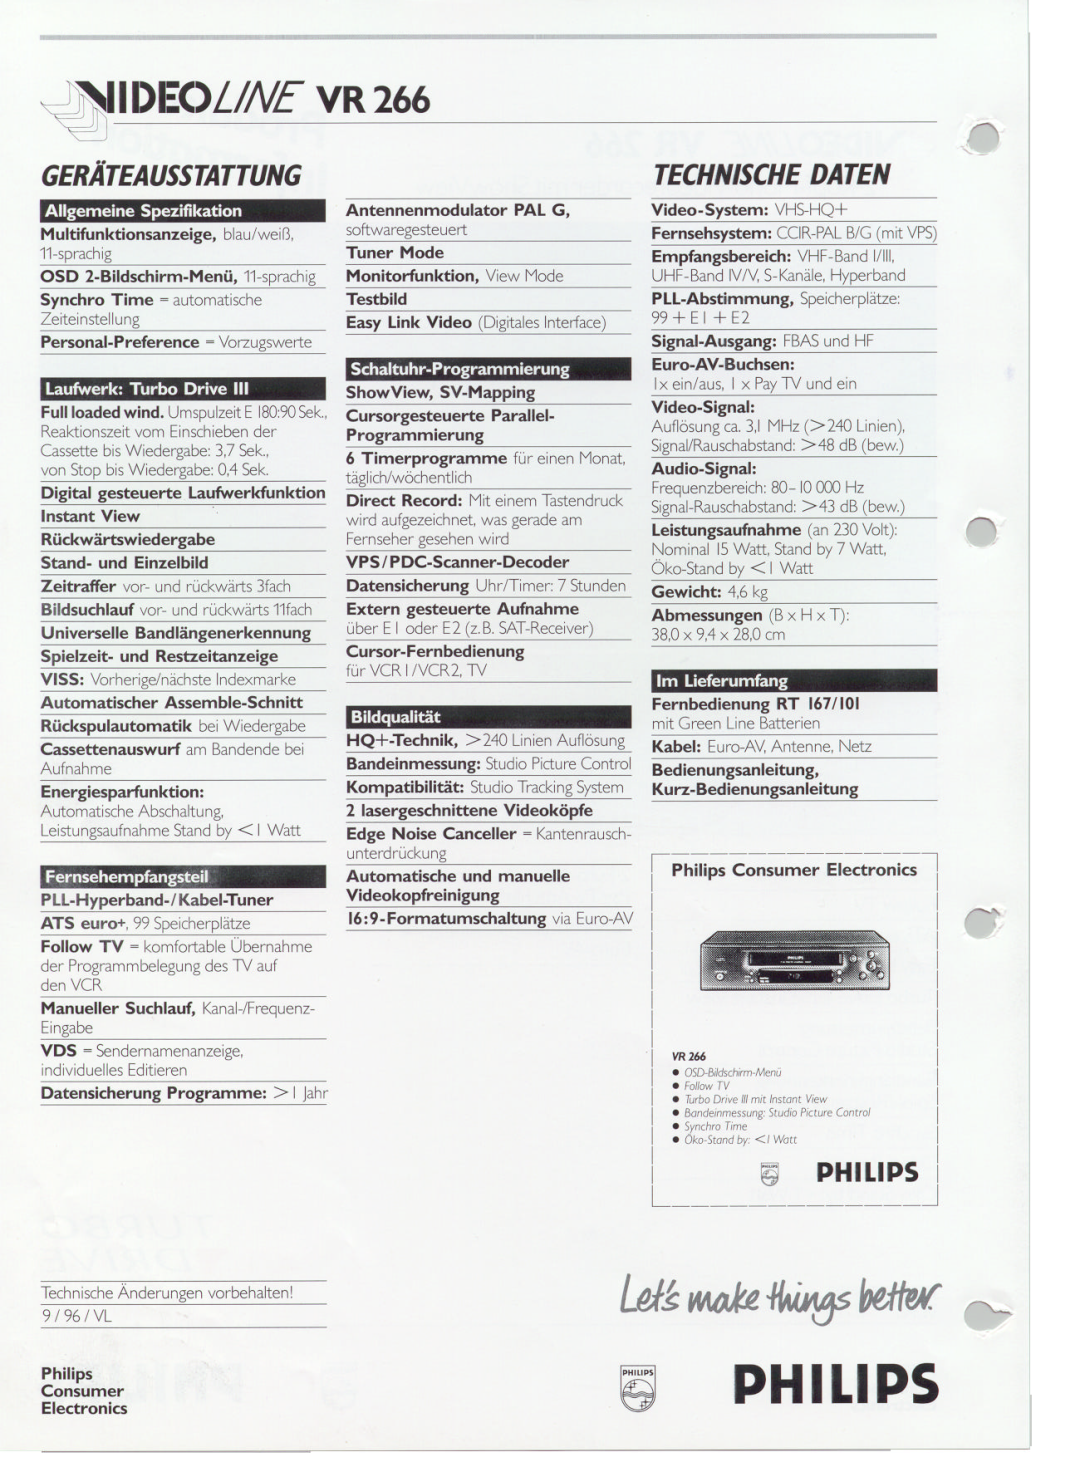 Philips VR 266 manual 